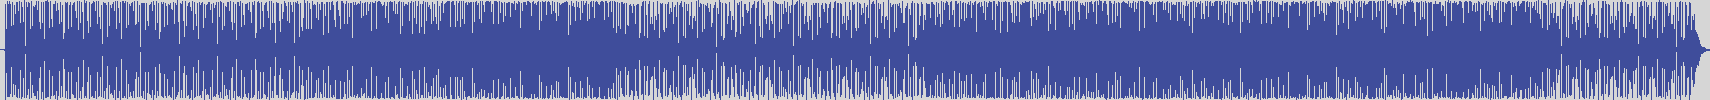 nf_boyz_records [NFY068] Ares Cerrato - Tax Set [Original Mix] audio wave form